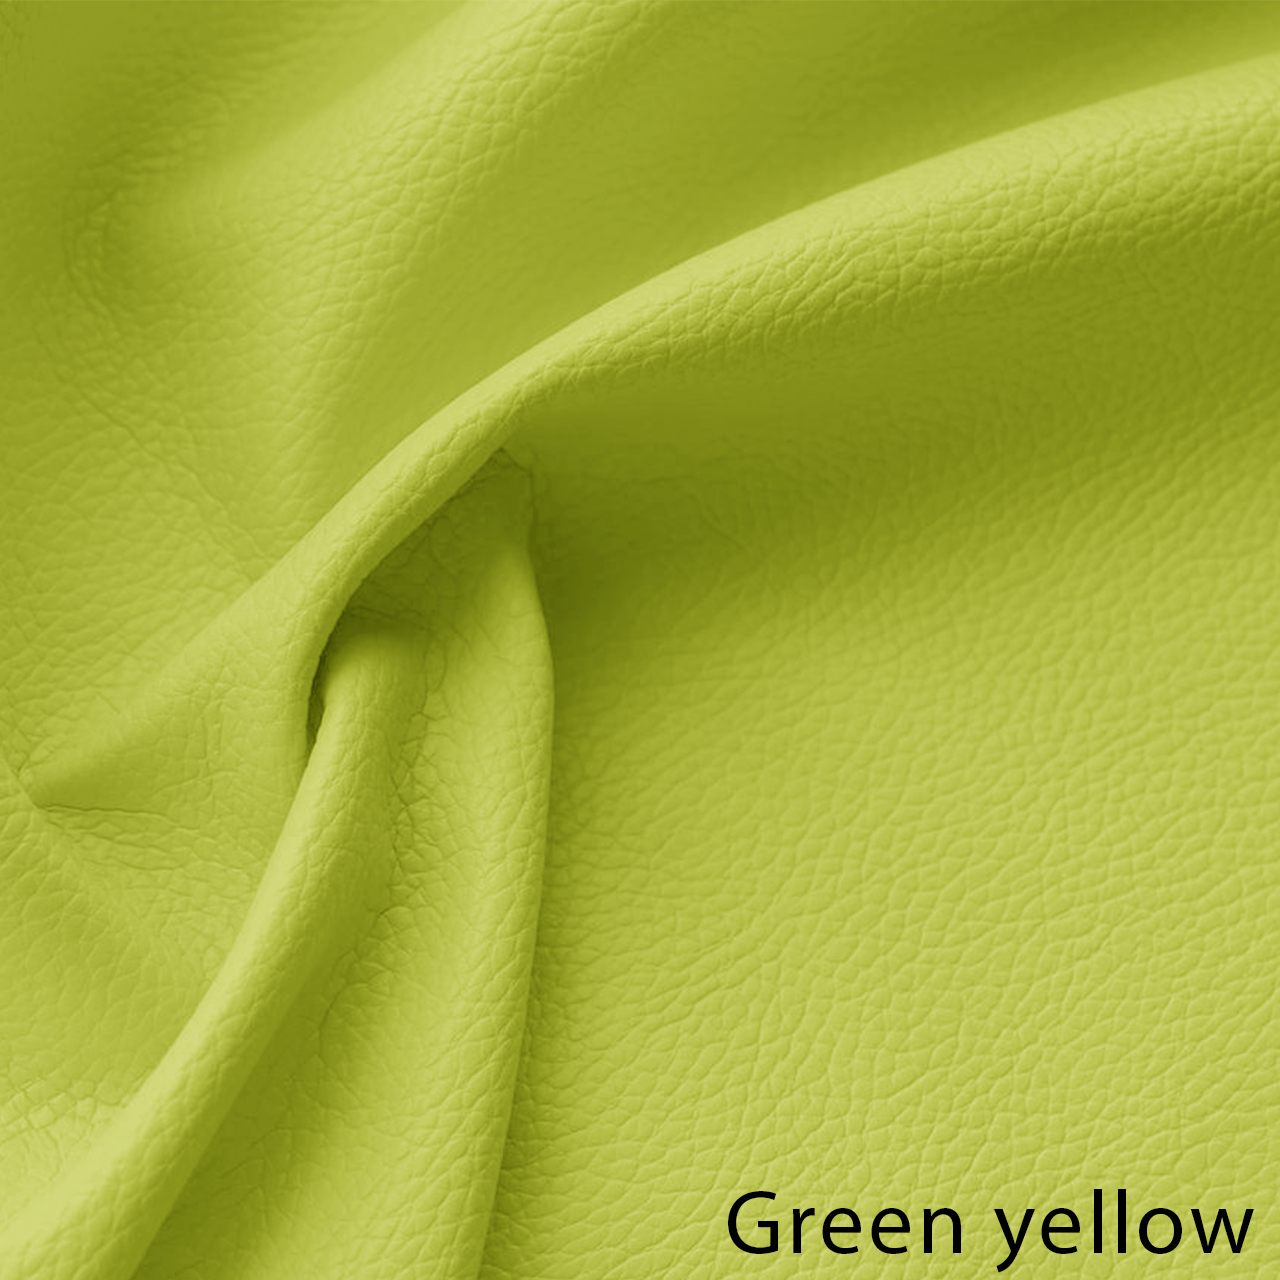 Green yellow